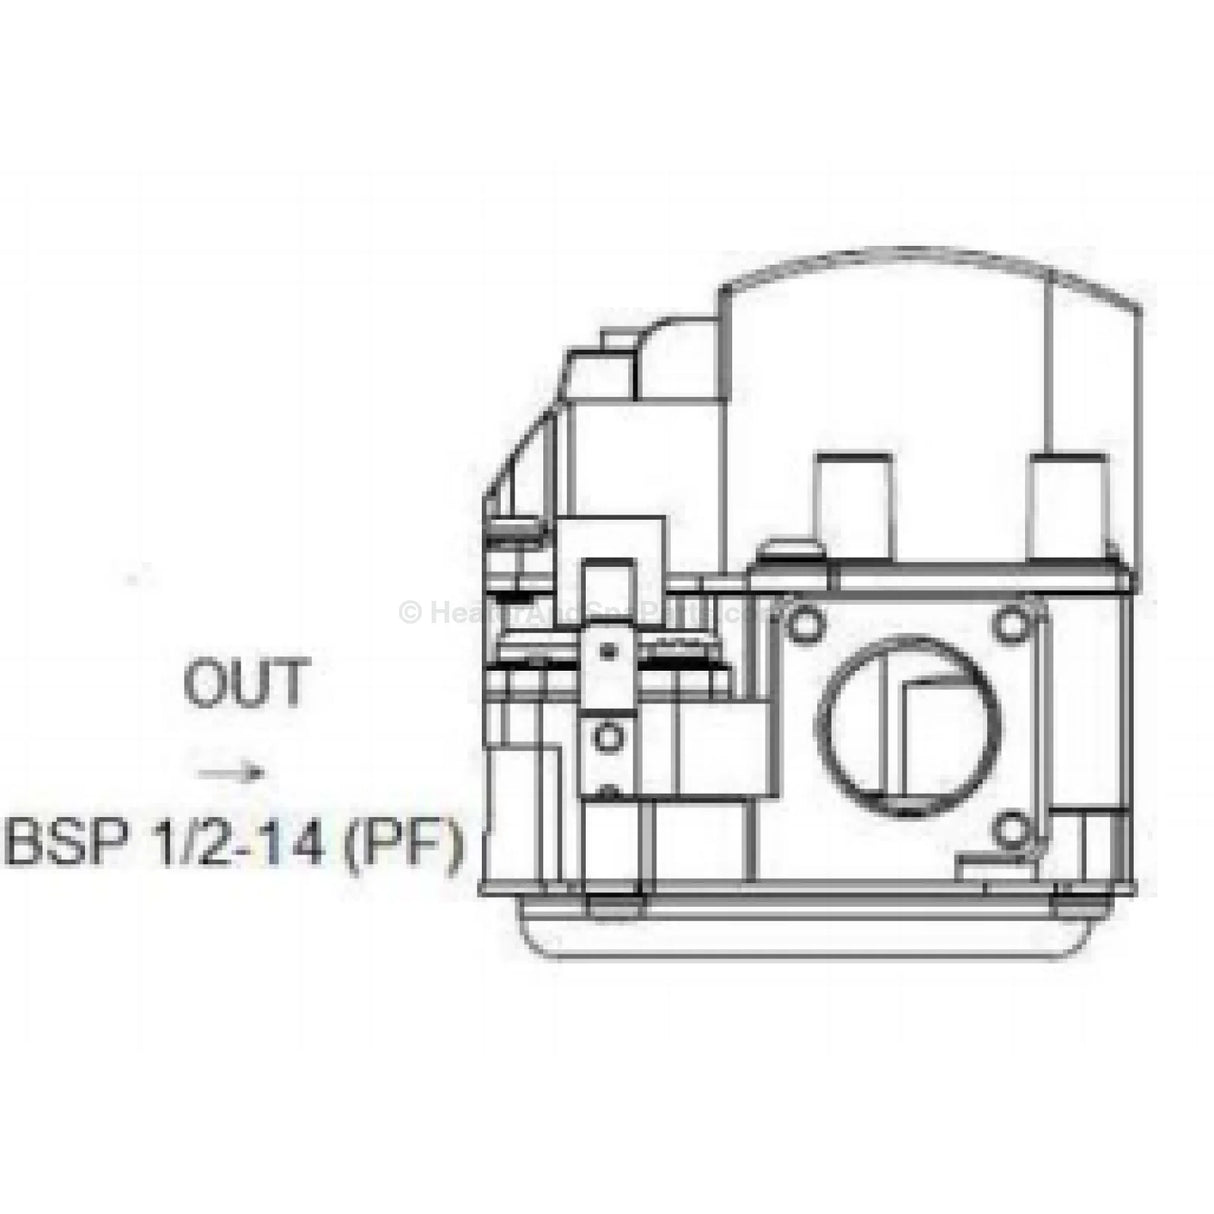 Techrite - Hurlcon Astralpool Gas Regulator Valve for HX 70, HX 120, WX Gas Heaters - Heater and Spa Parts